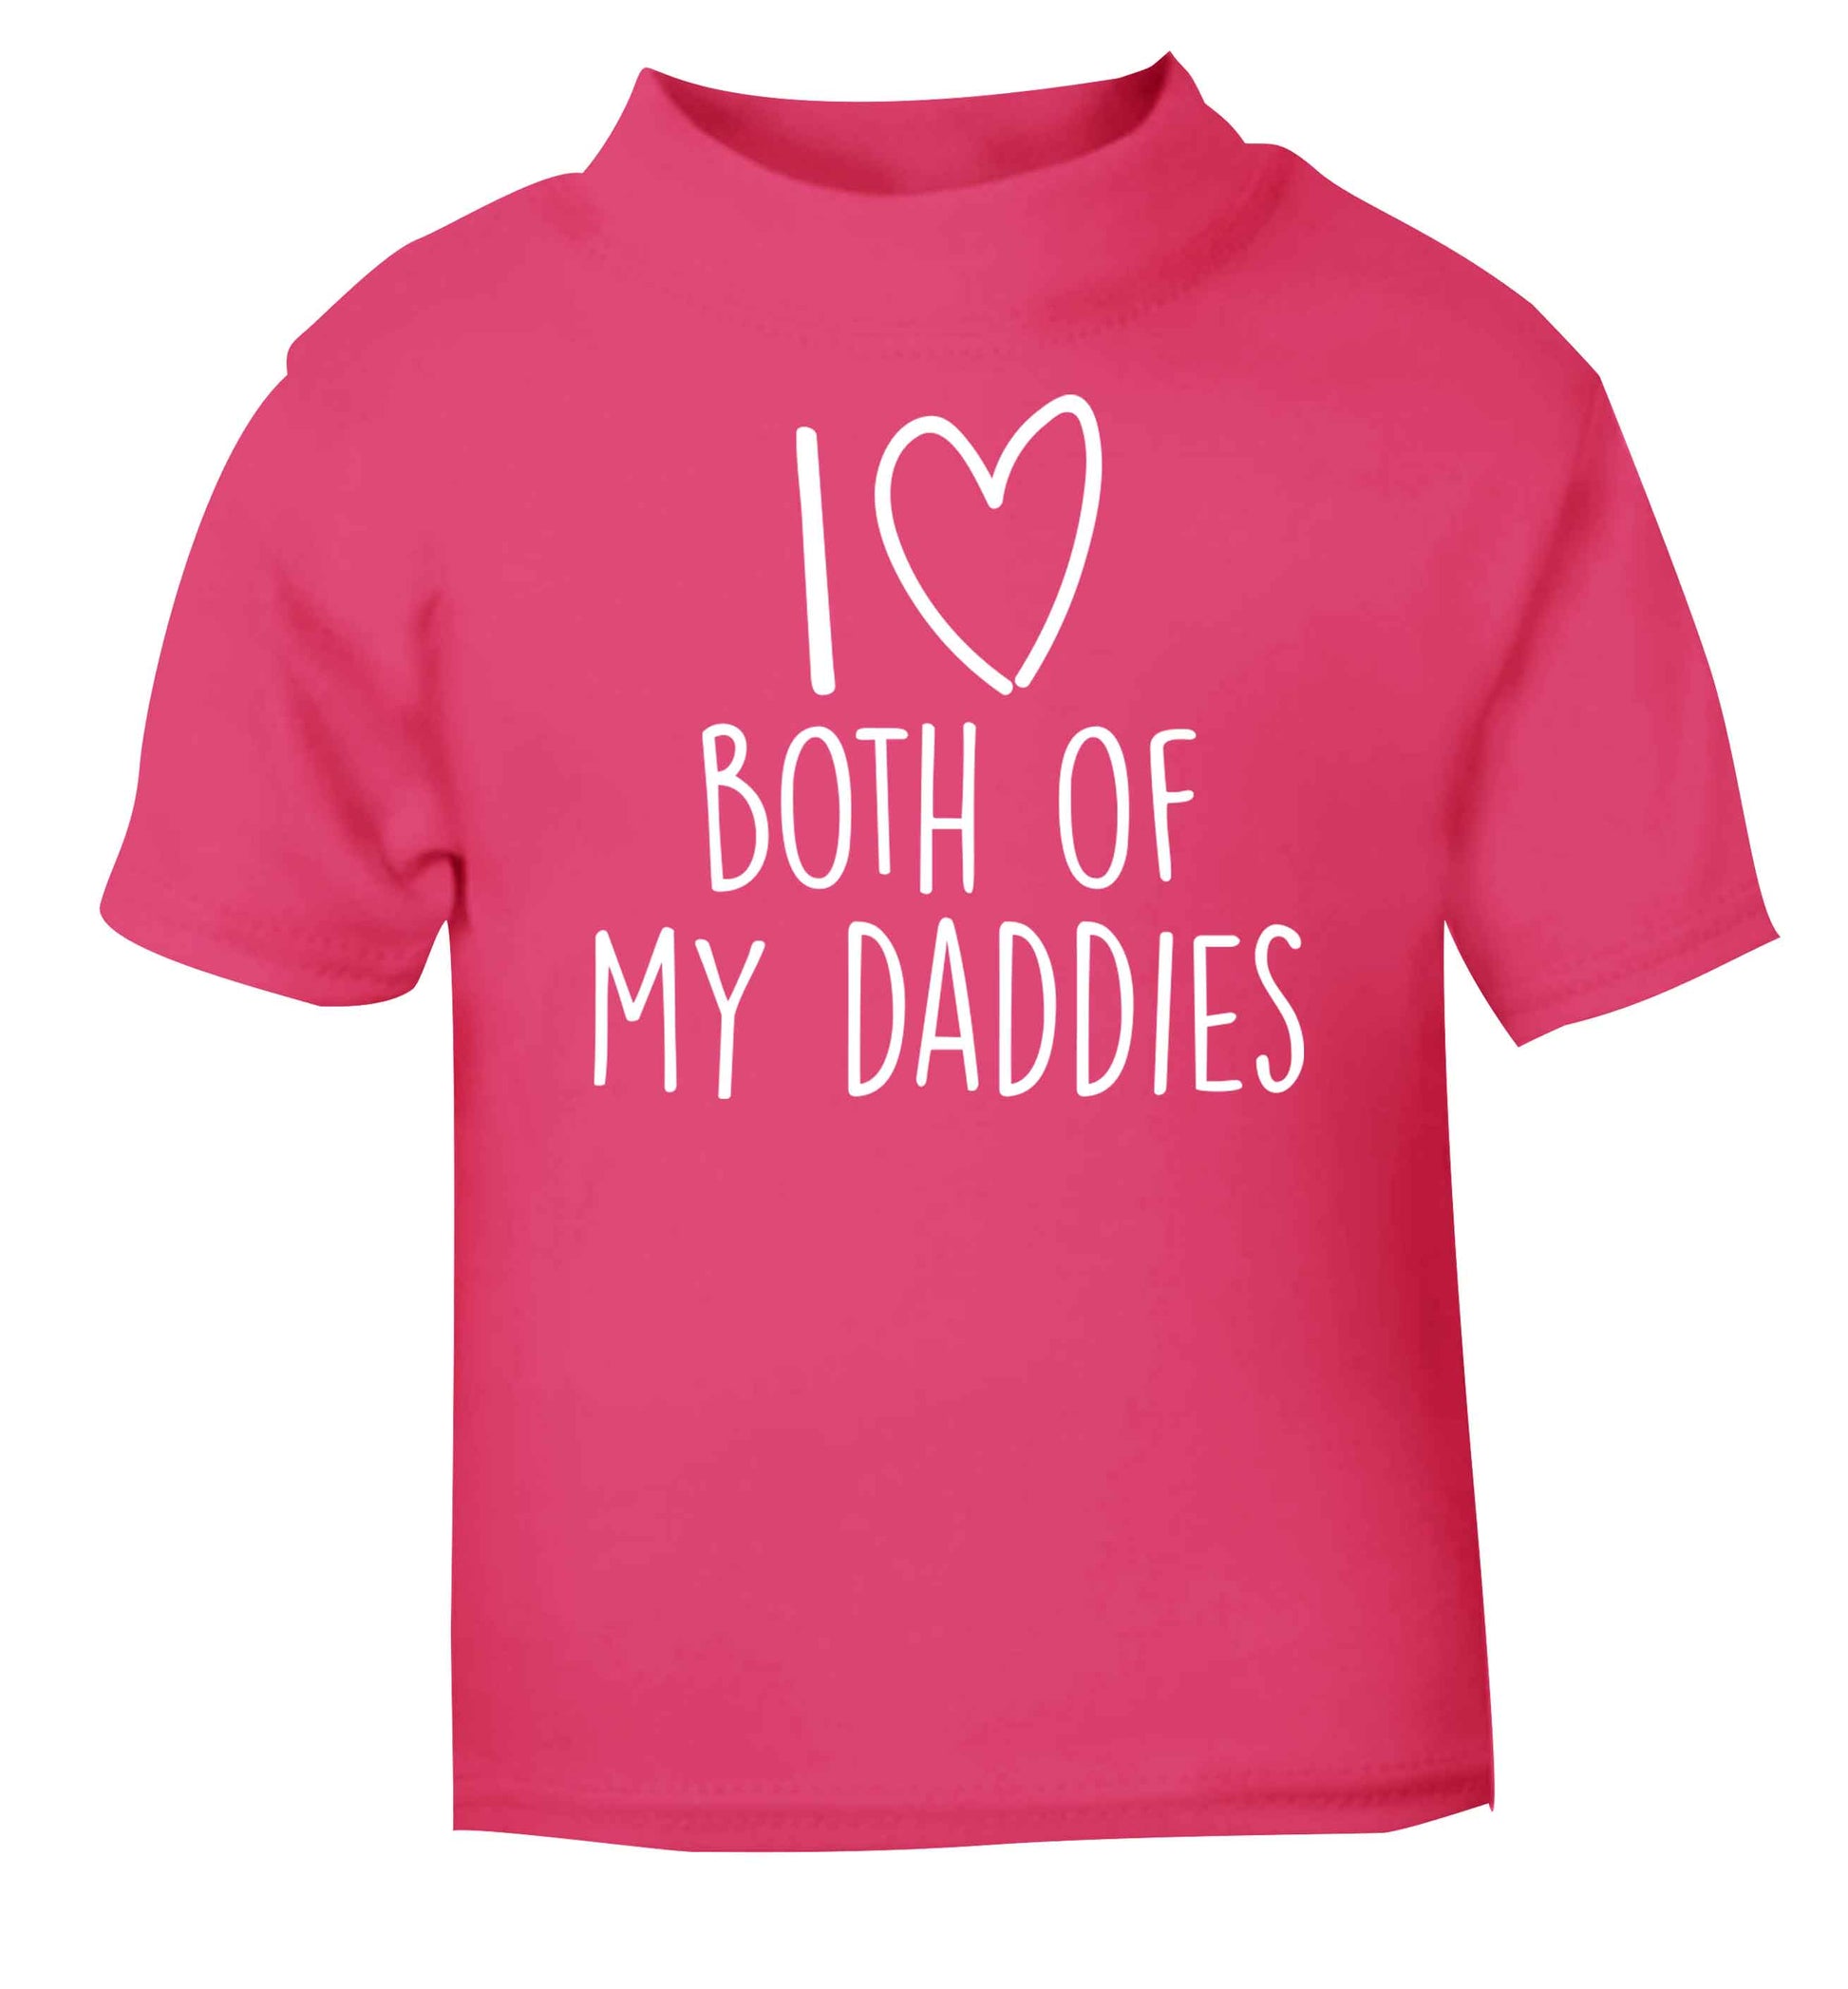 I love both of my daddies pink baby toddler Tshirt 2 Years